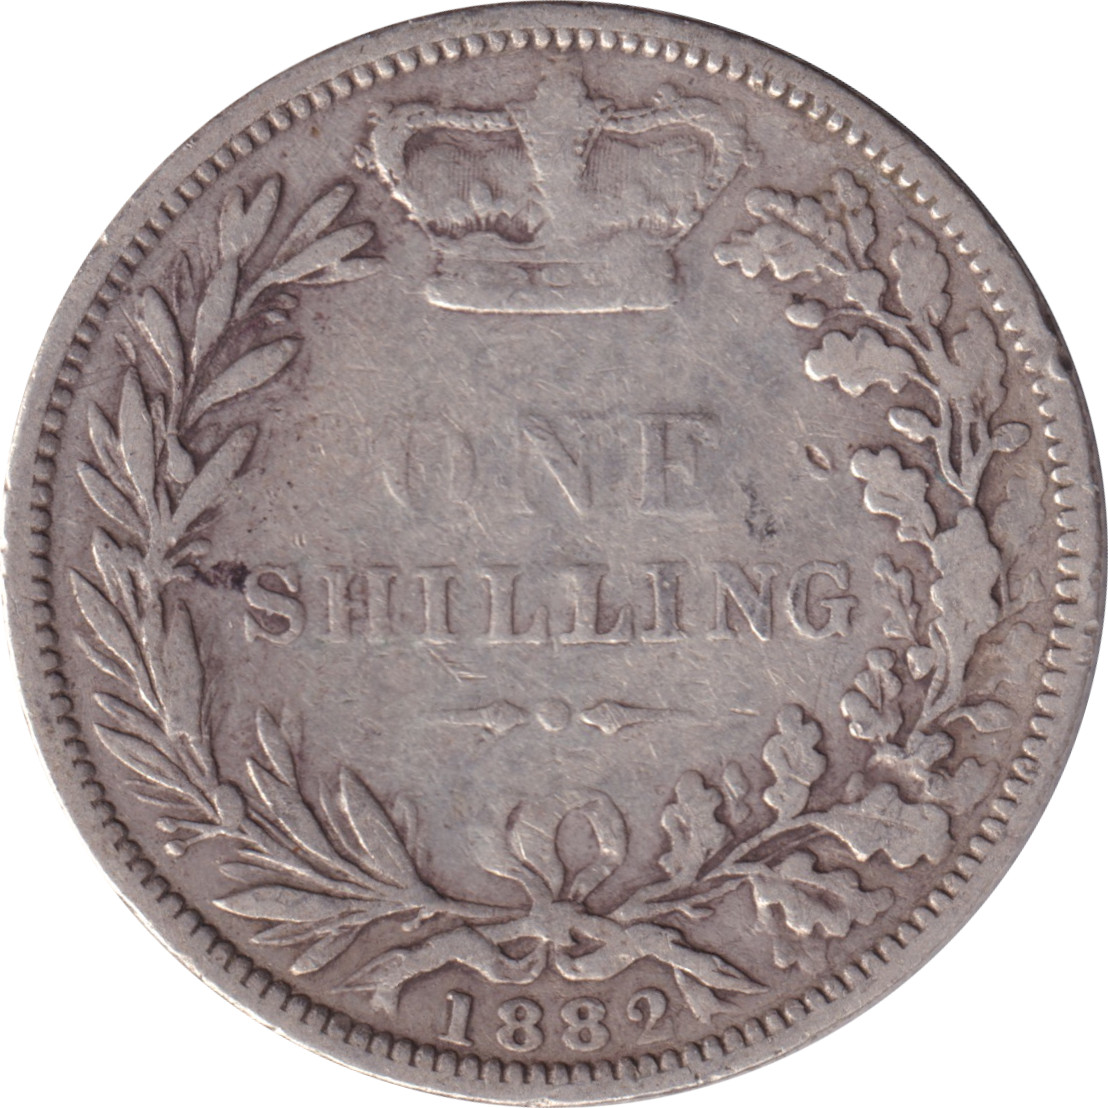 1 shilling - Victoria - Young head